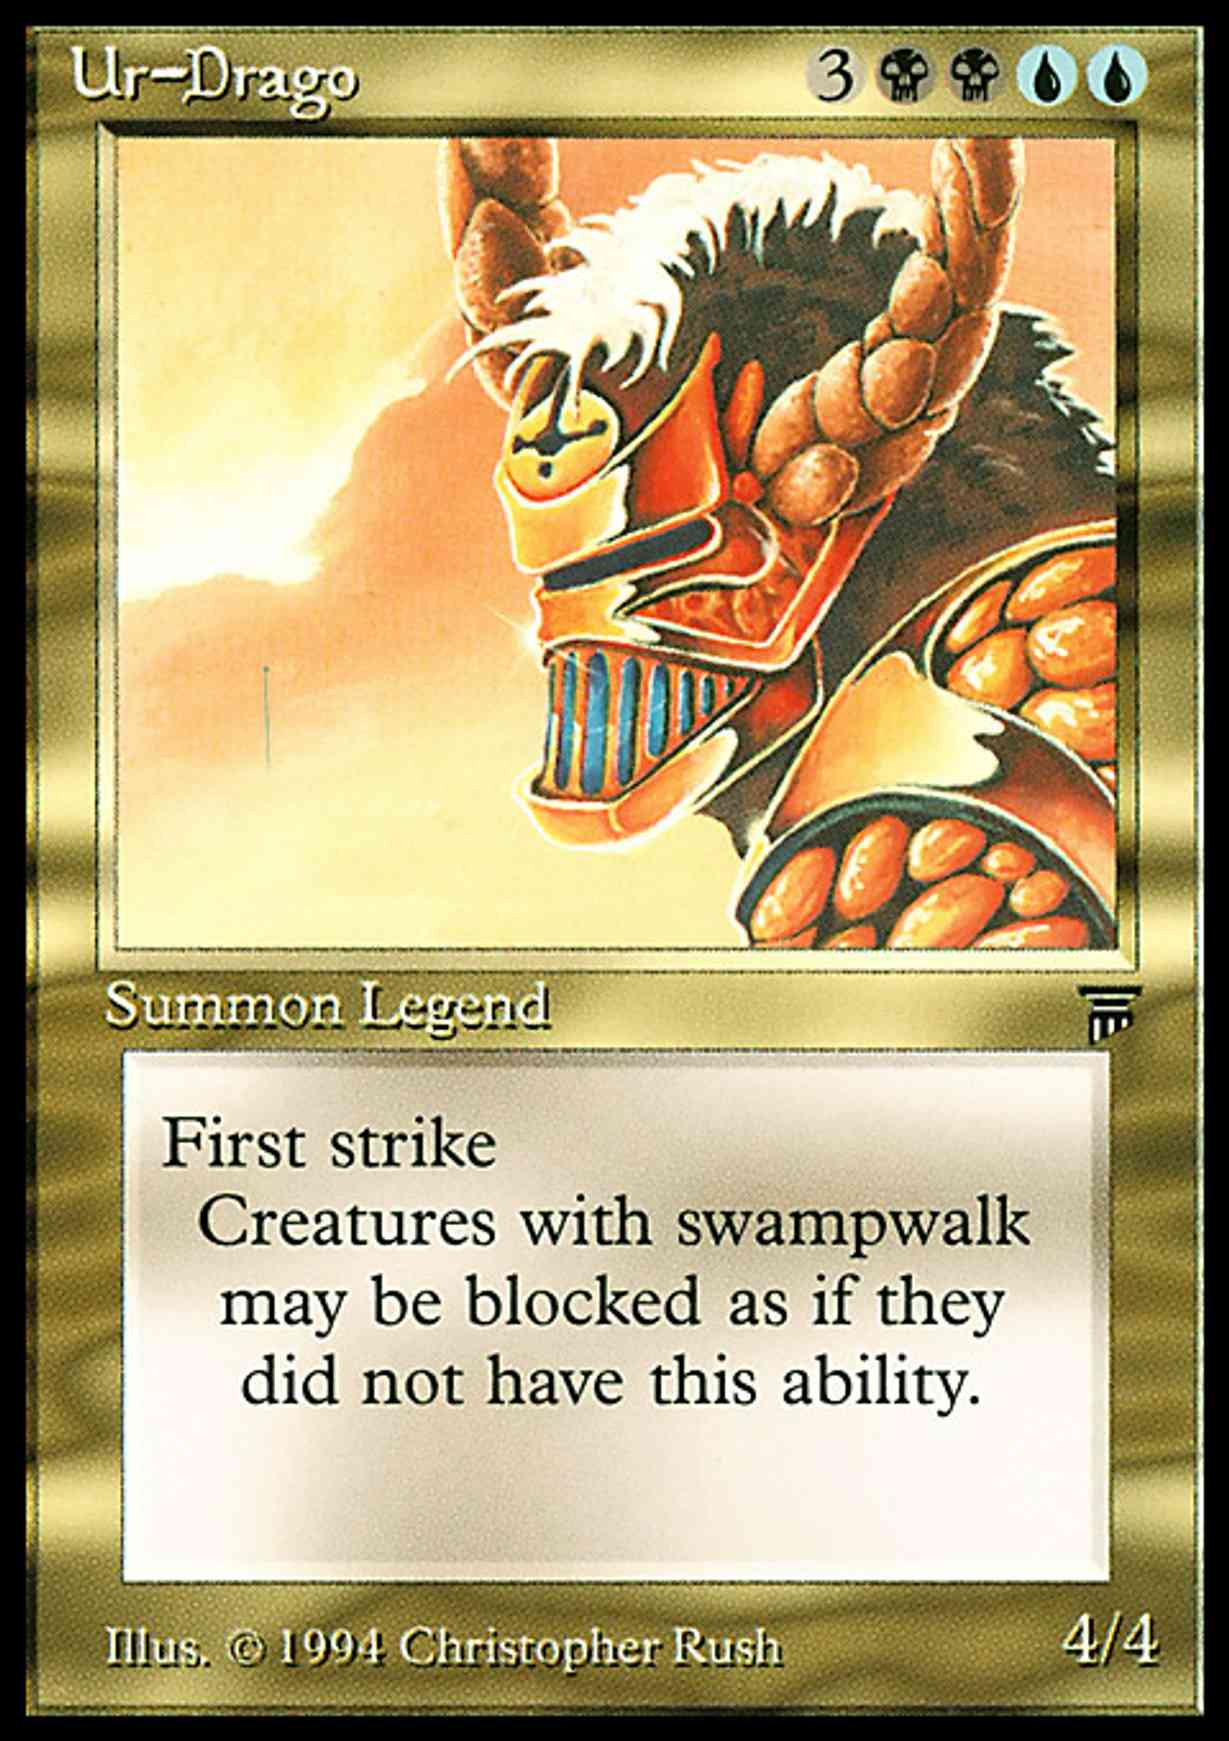 Ur-Drago magic card front